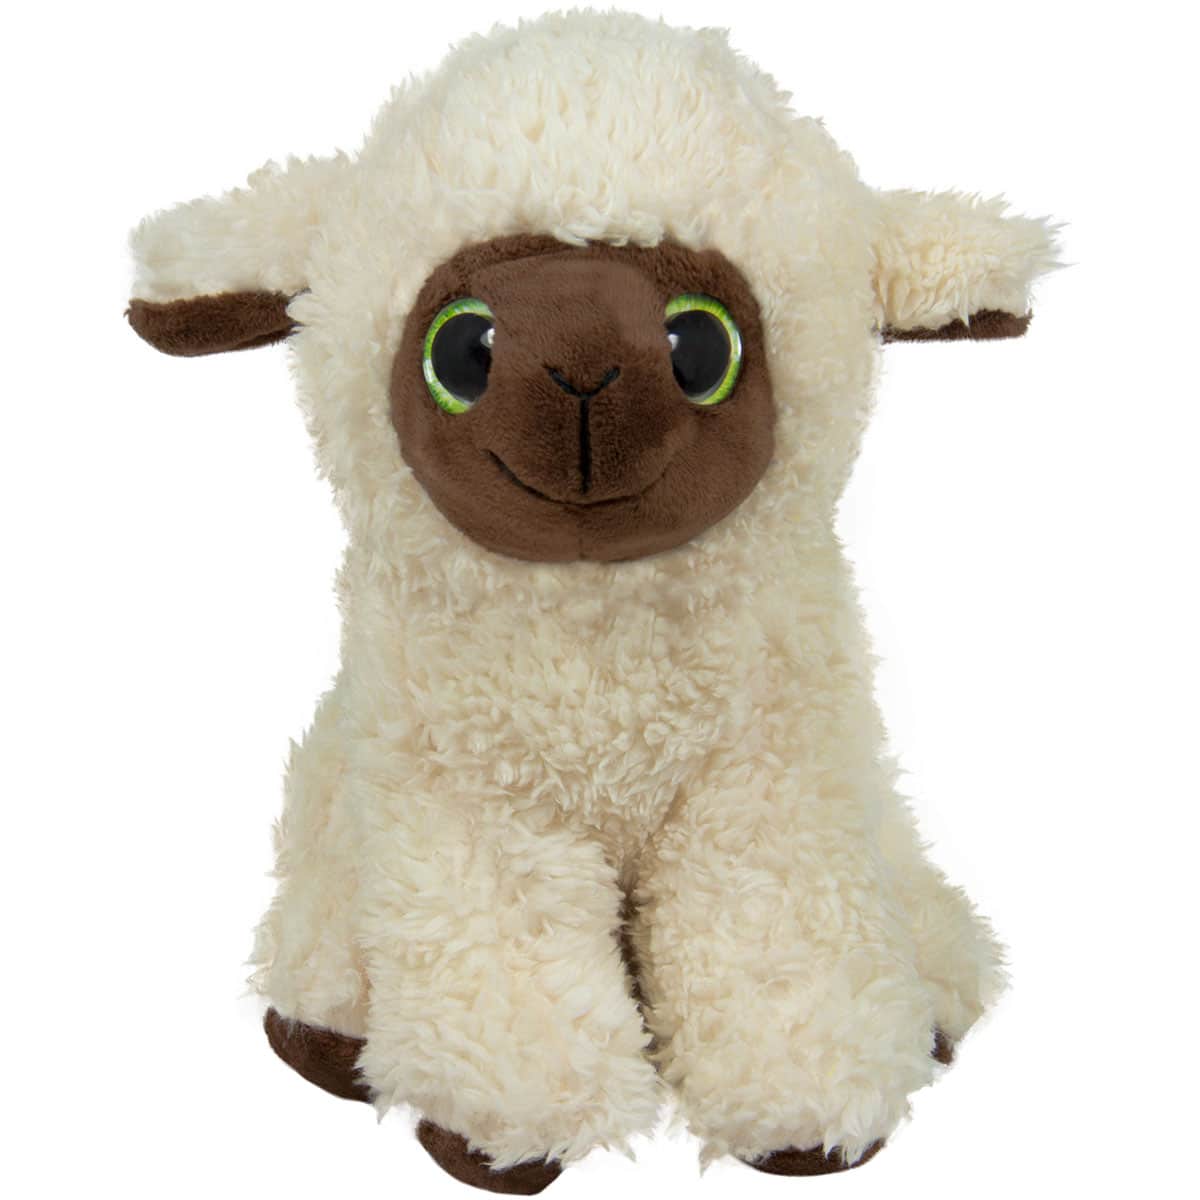 Small animals with big eyes - Sheep